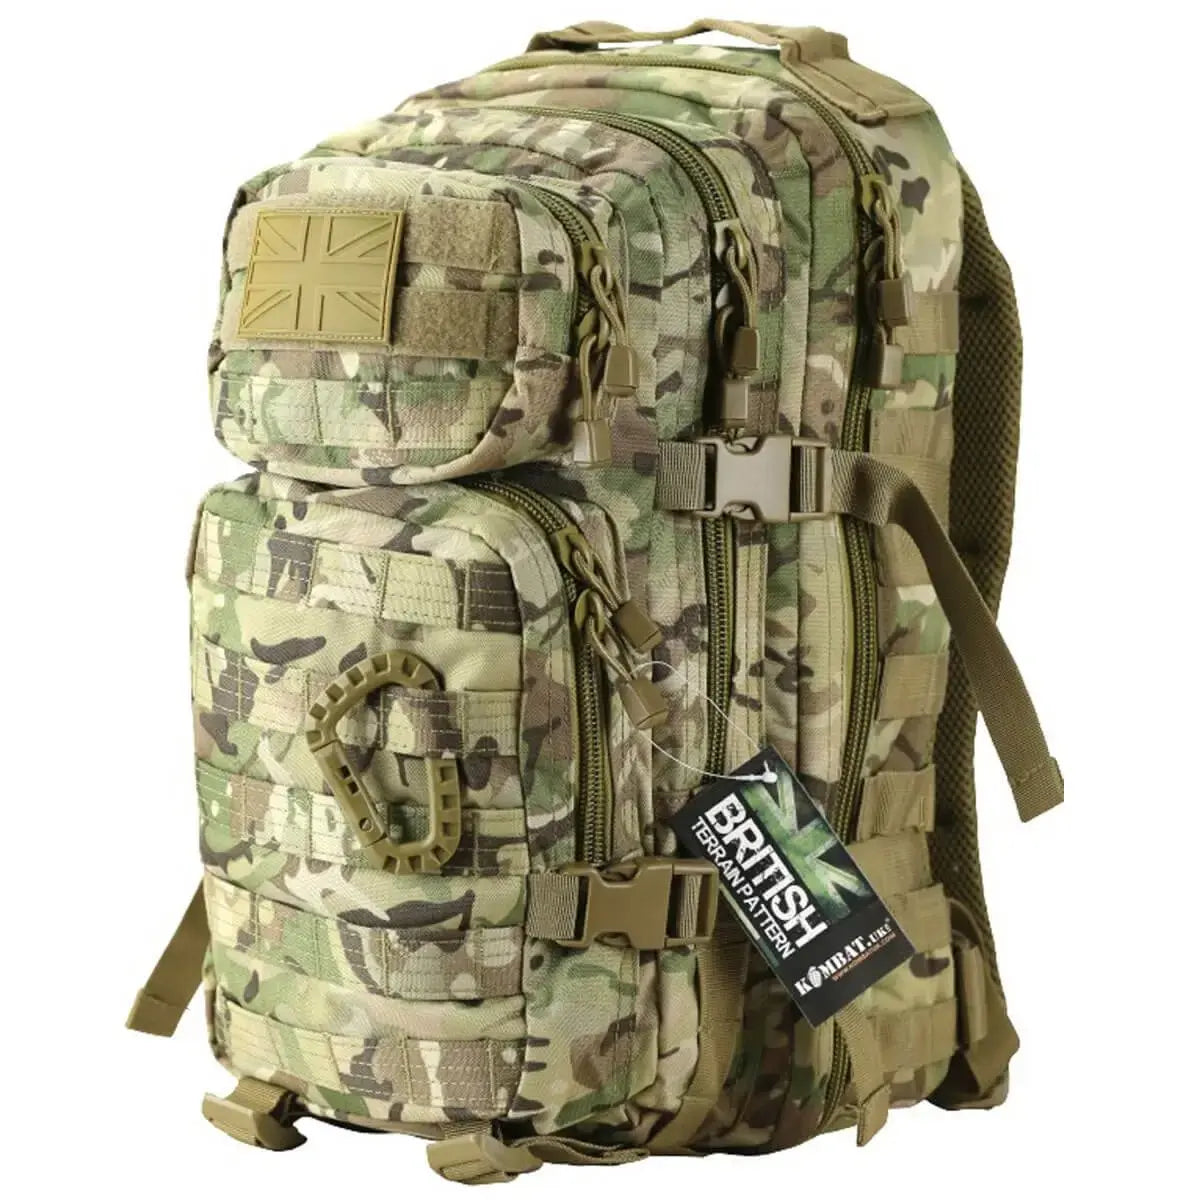 Uk army military backpack